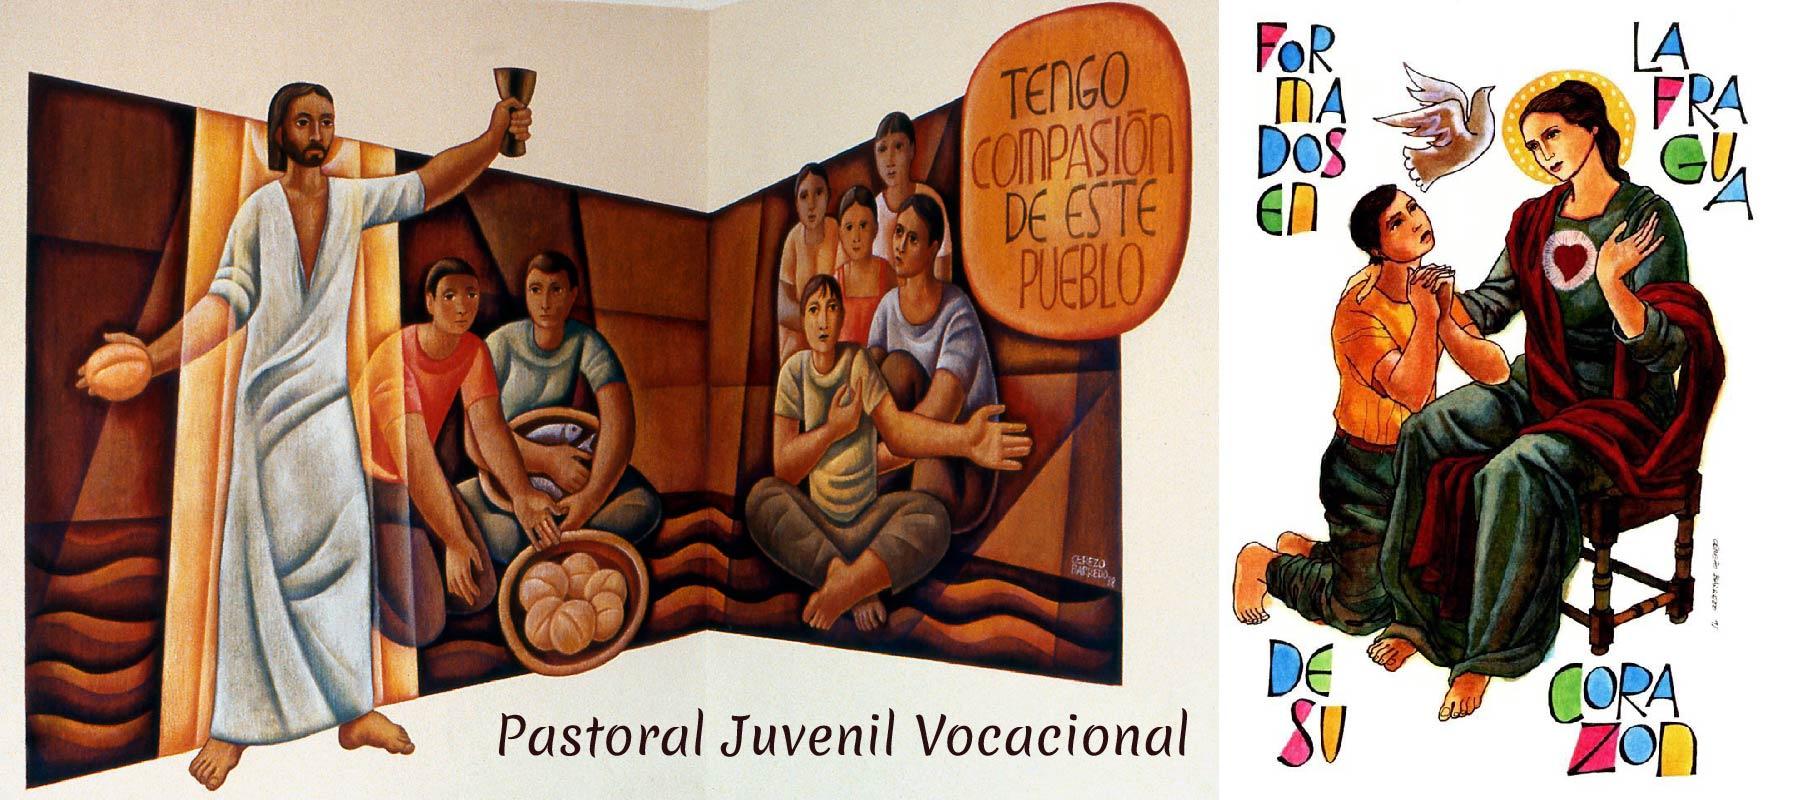 Pastoral Juvenil Vocacional